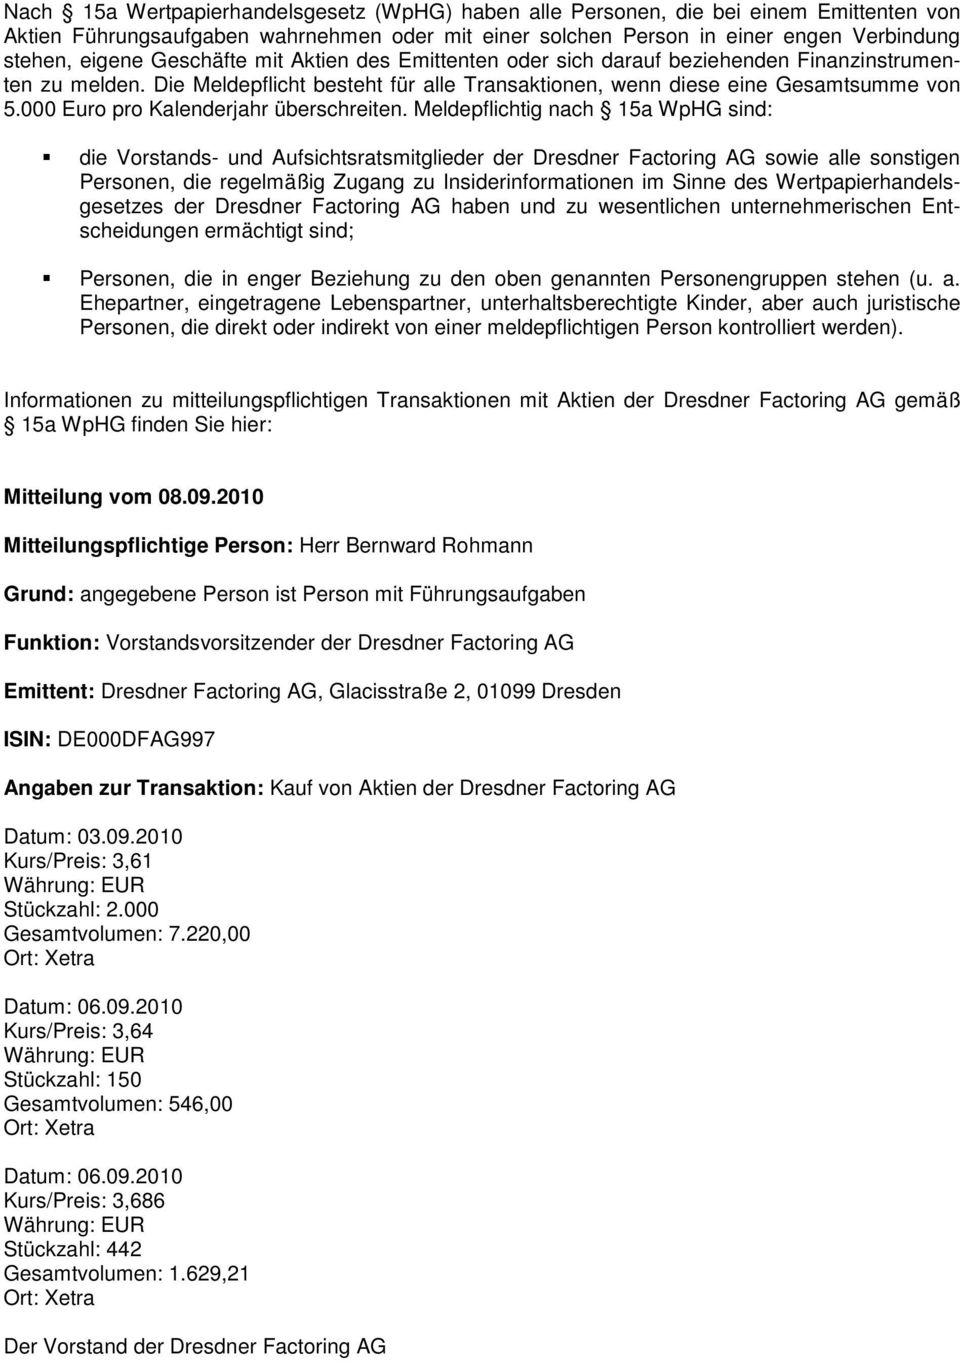 der Dresdner Factoring AG Datum: 03.09.2010 Kurs/Preis: 3,61 Stückzahl: 2.